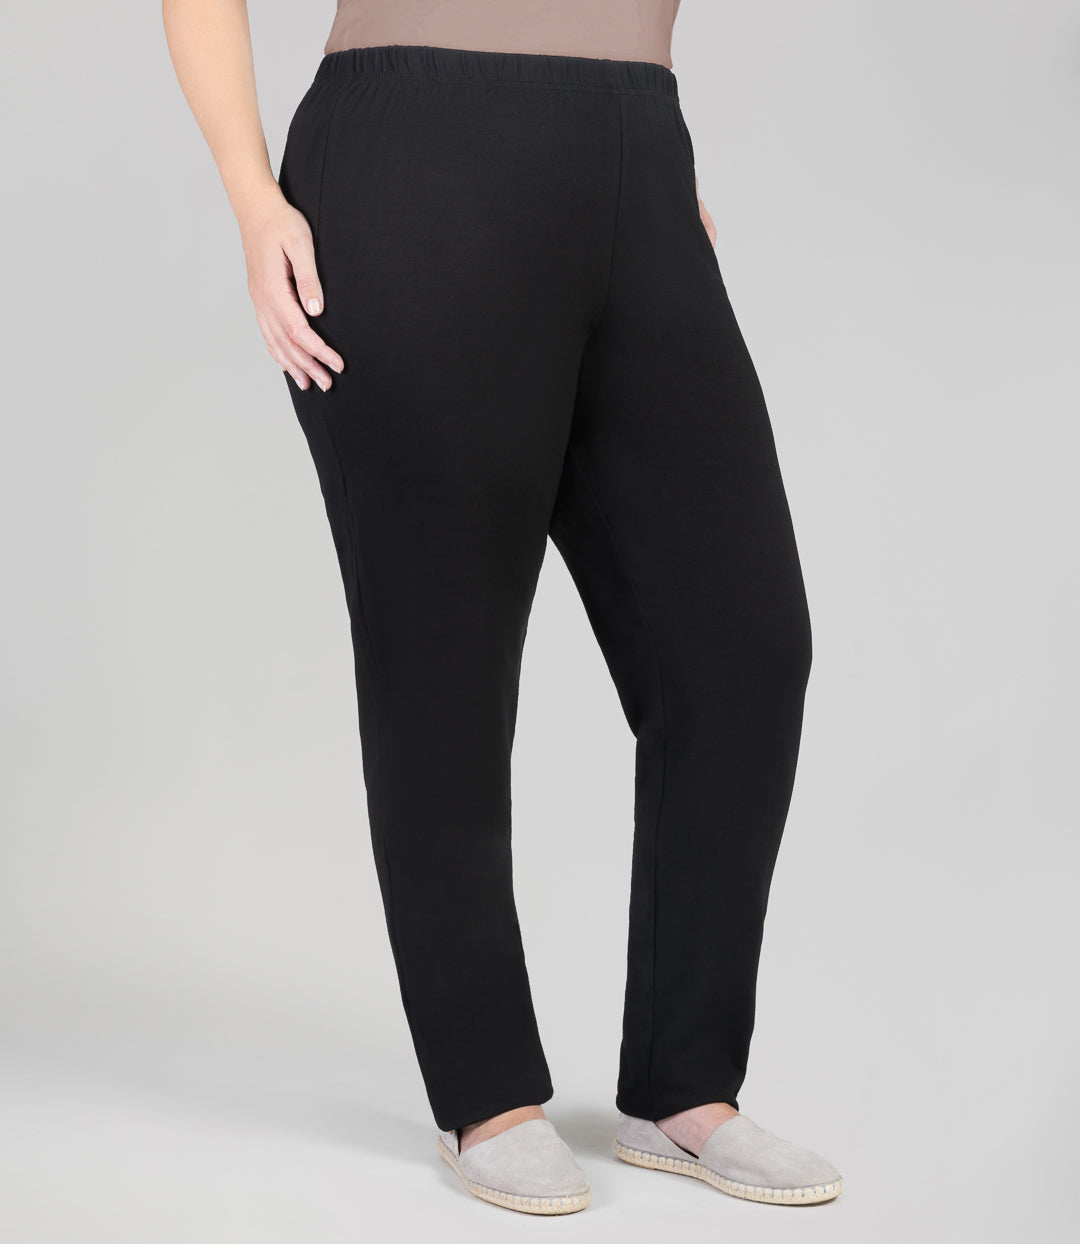 plus Size Yoga Pants for Women 3x Long Women High Waist Tight Sports Elastic